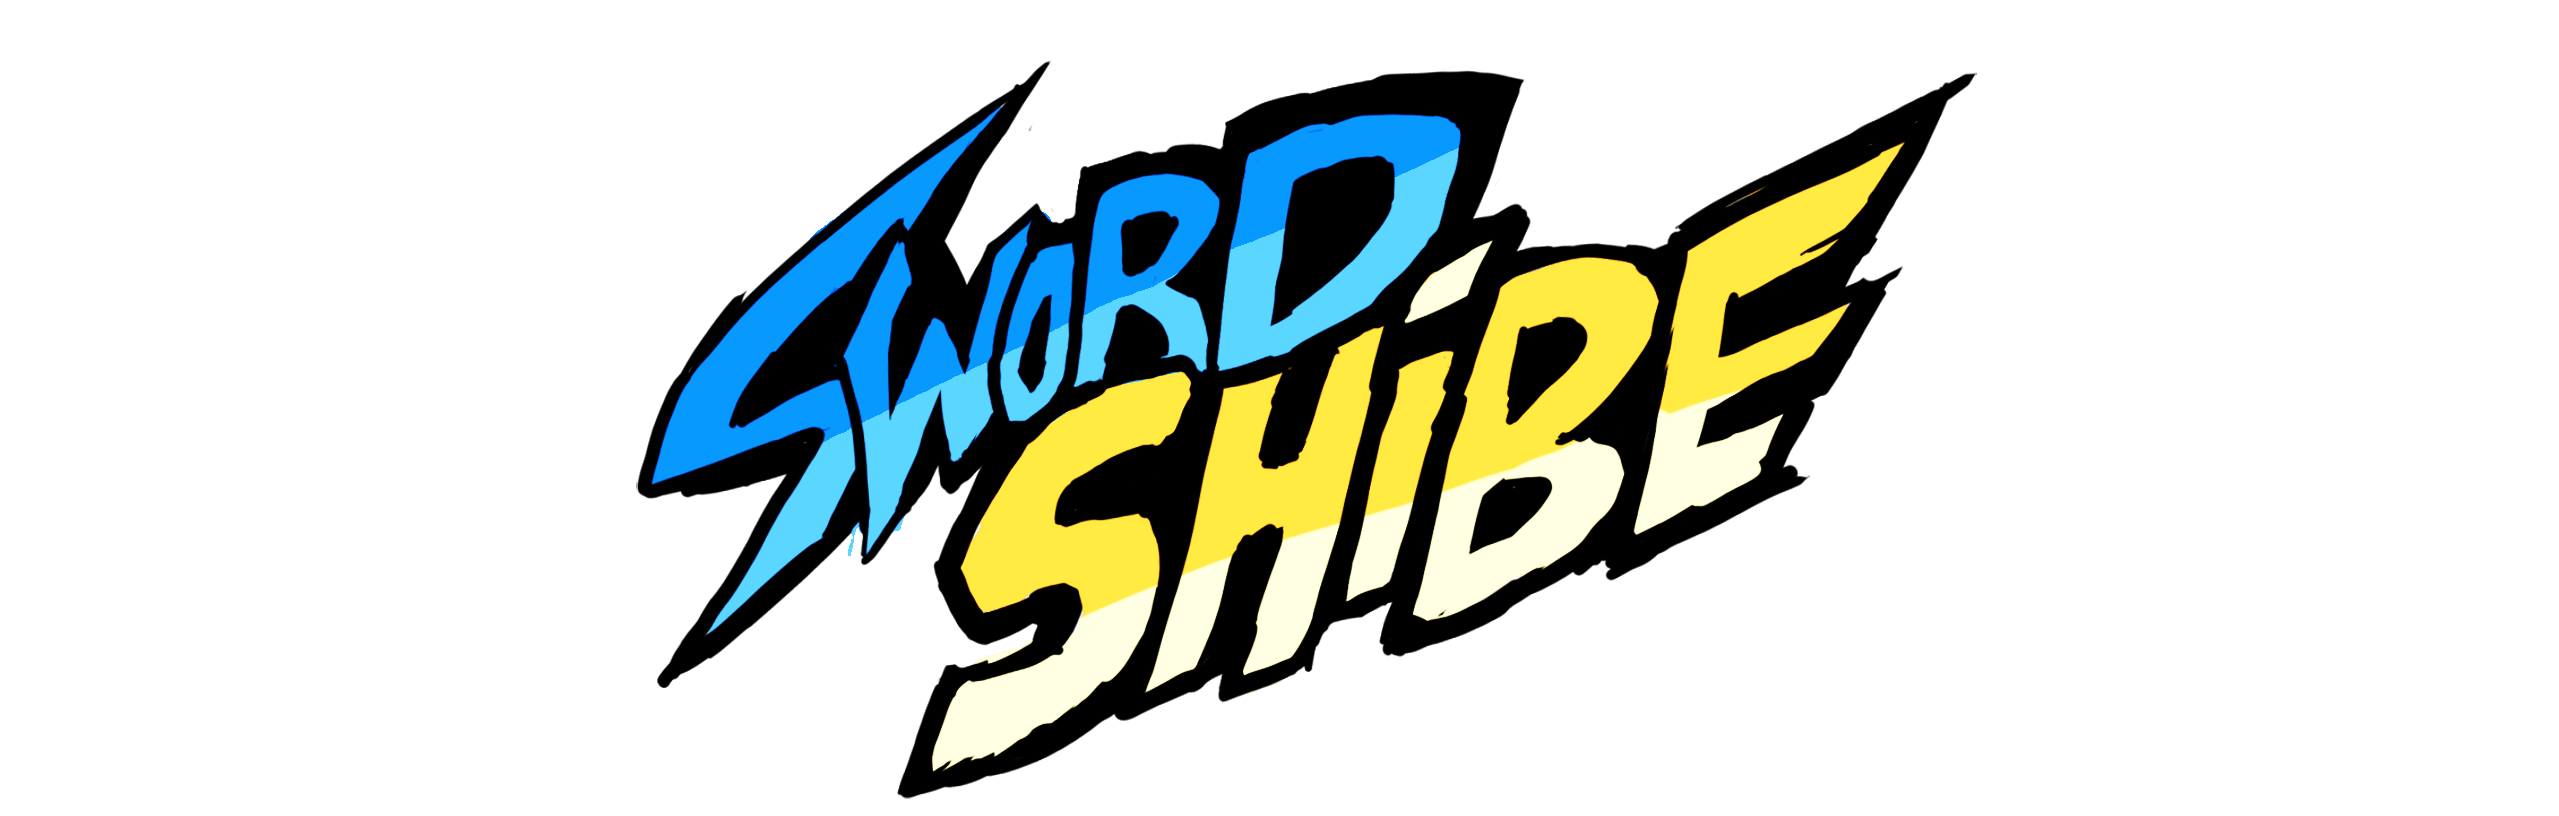 Sword Shibe